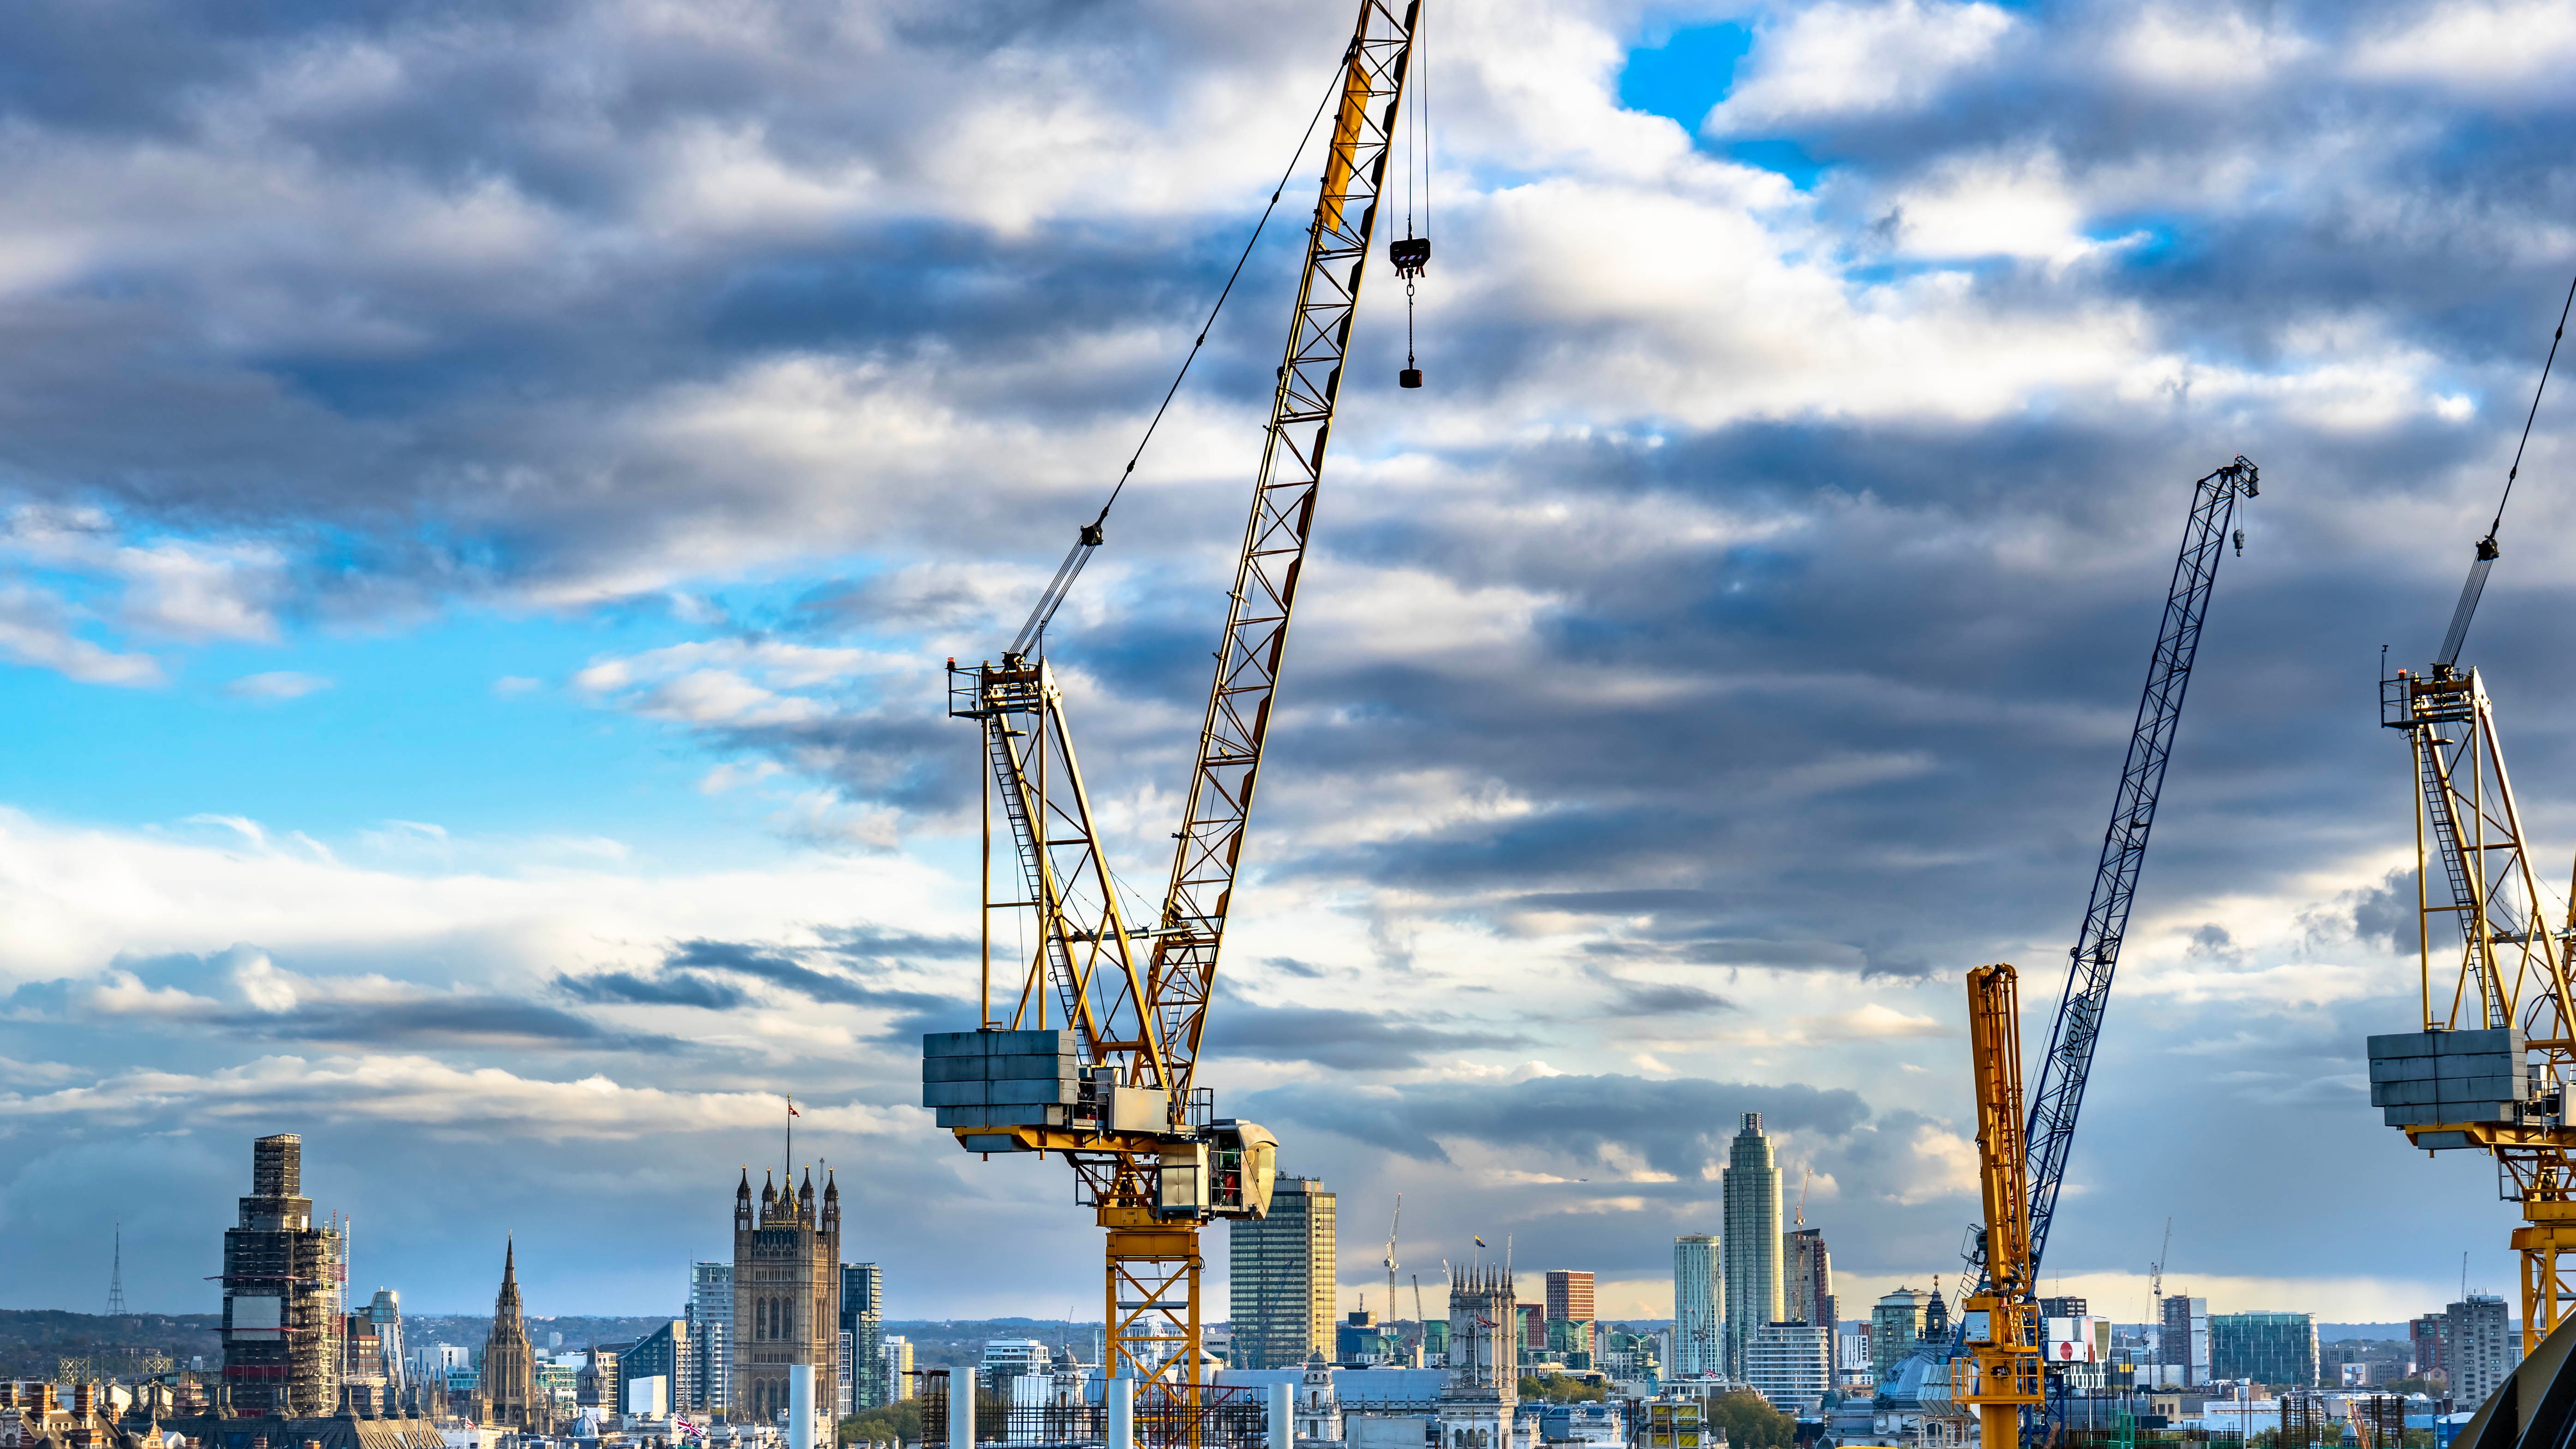 Cranes on London construction site